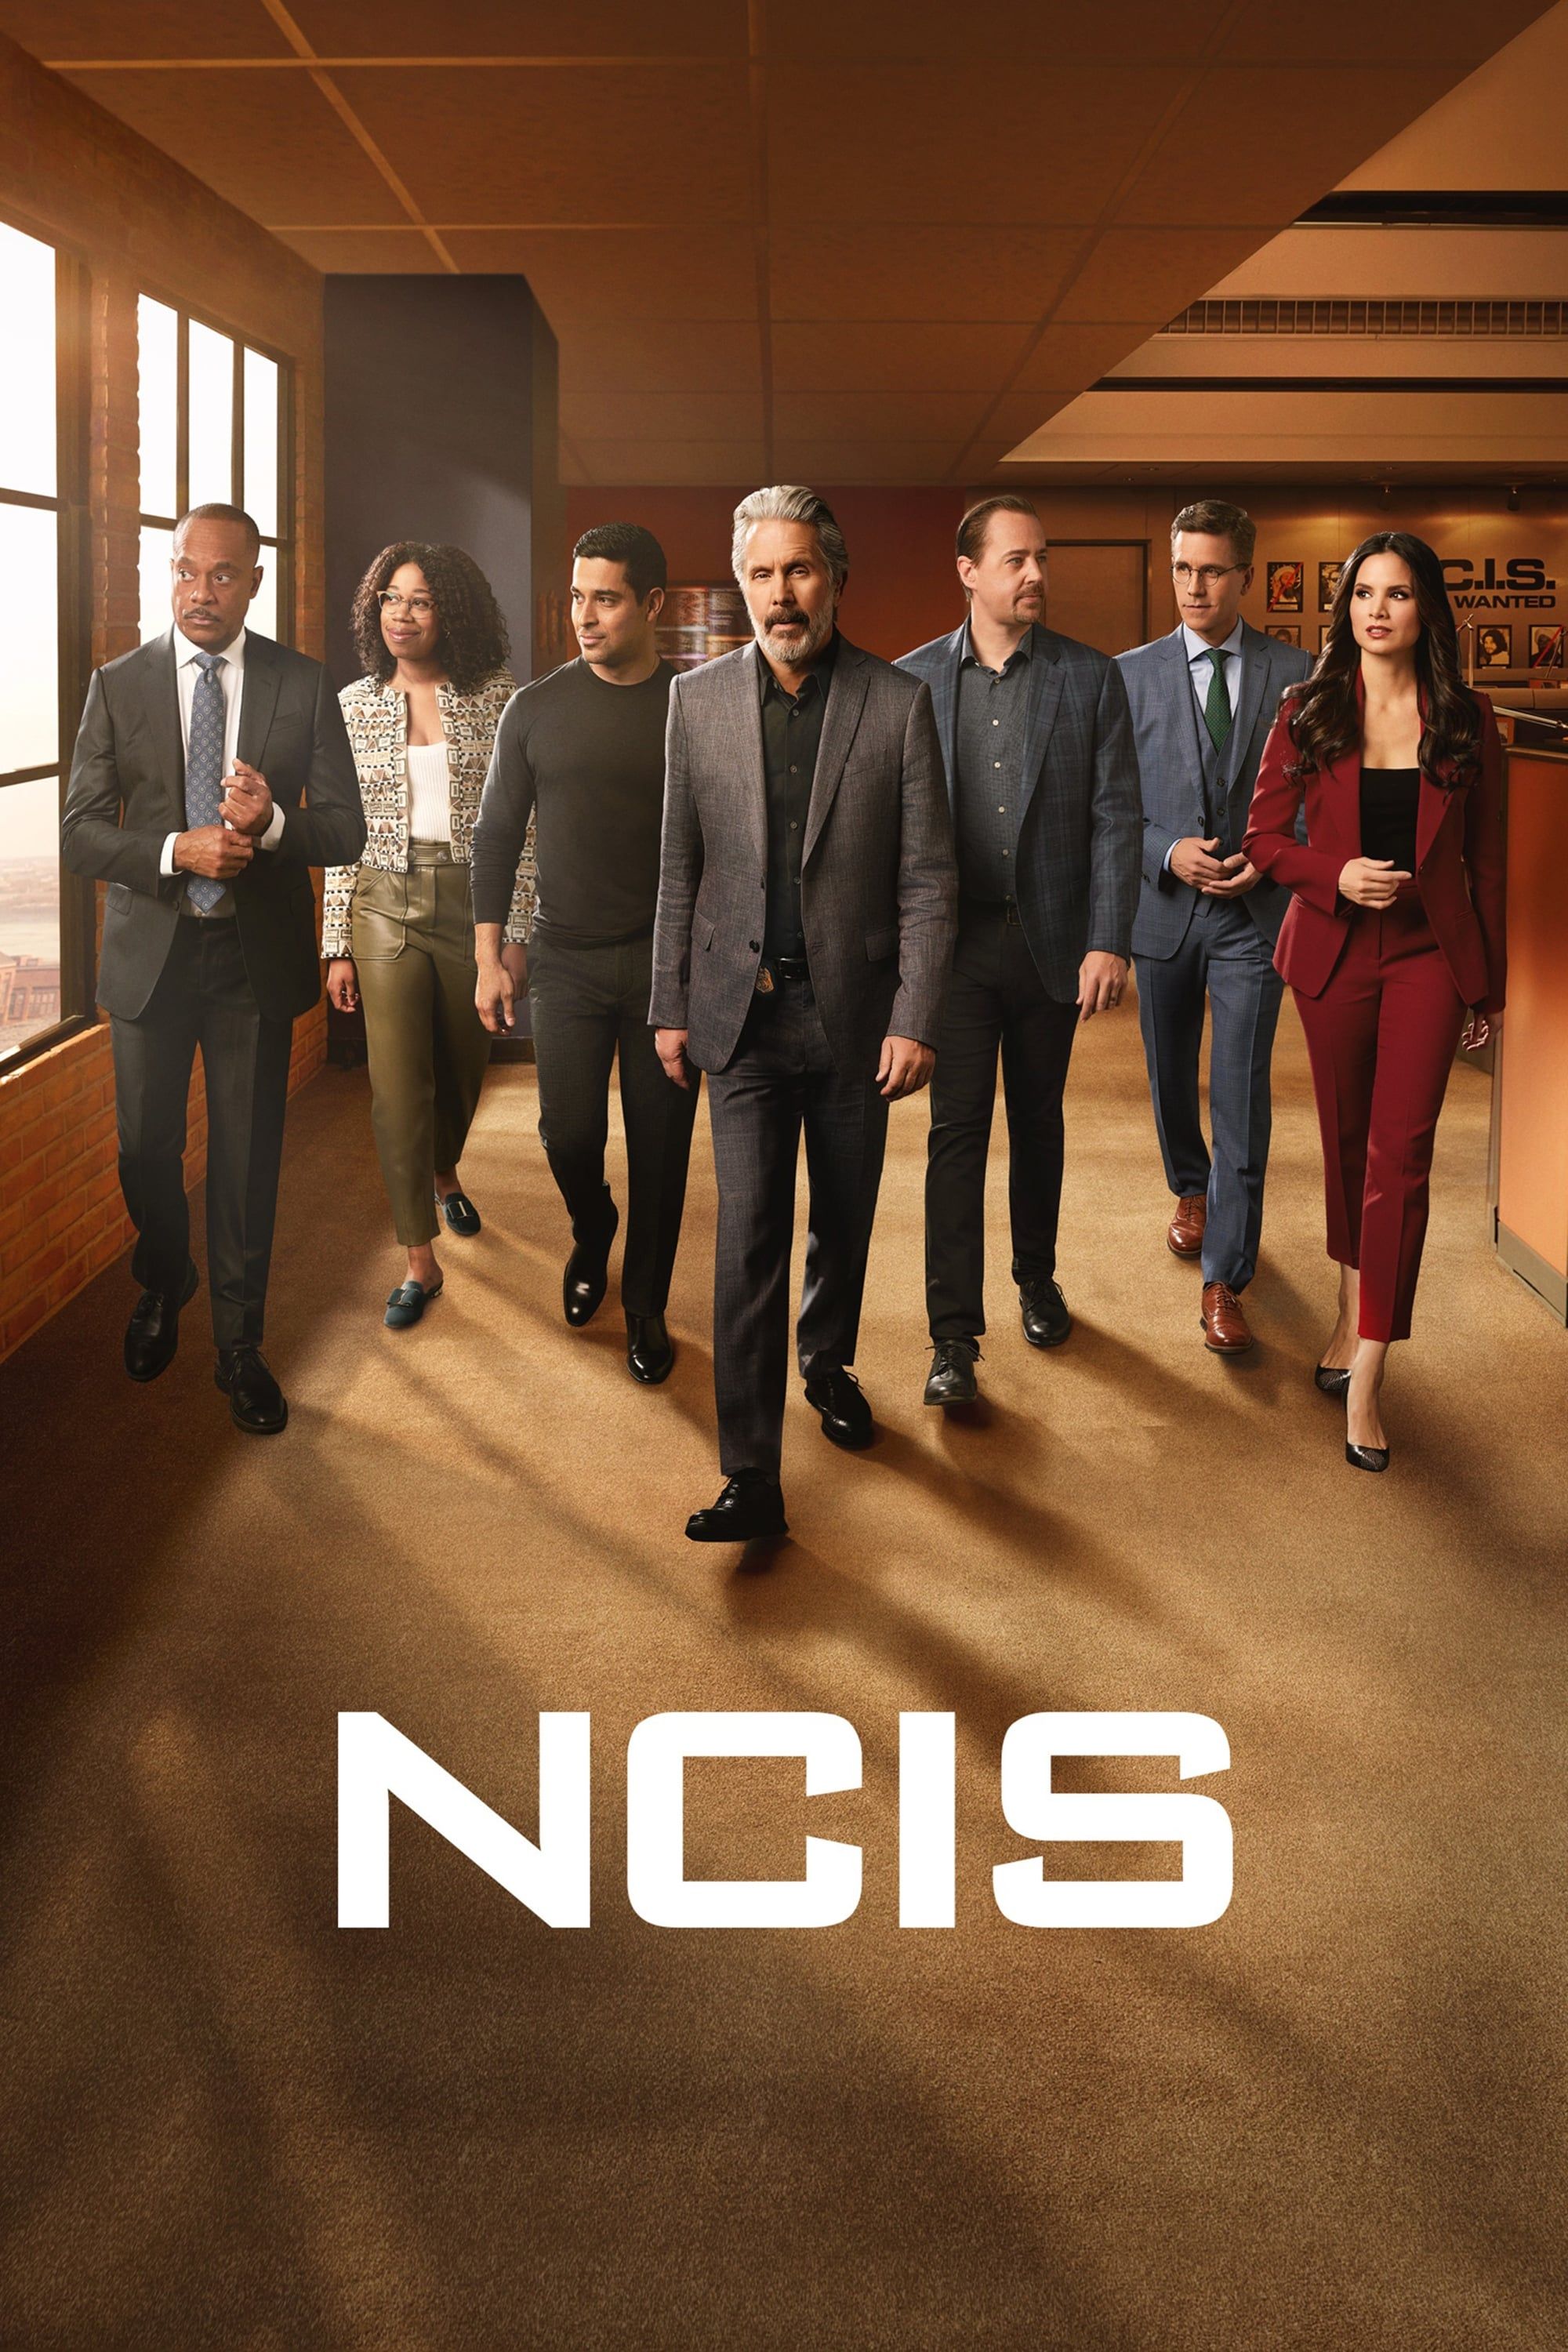 NCIS TV Show Poster